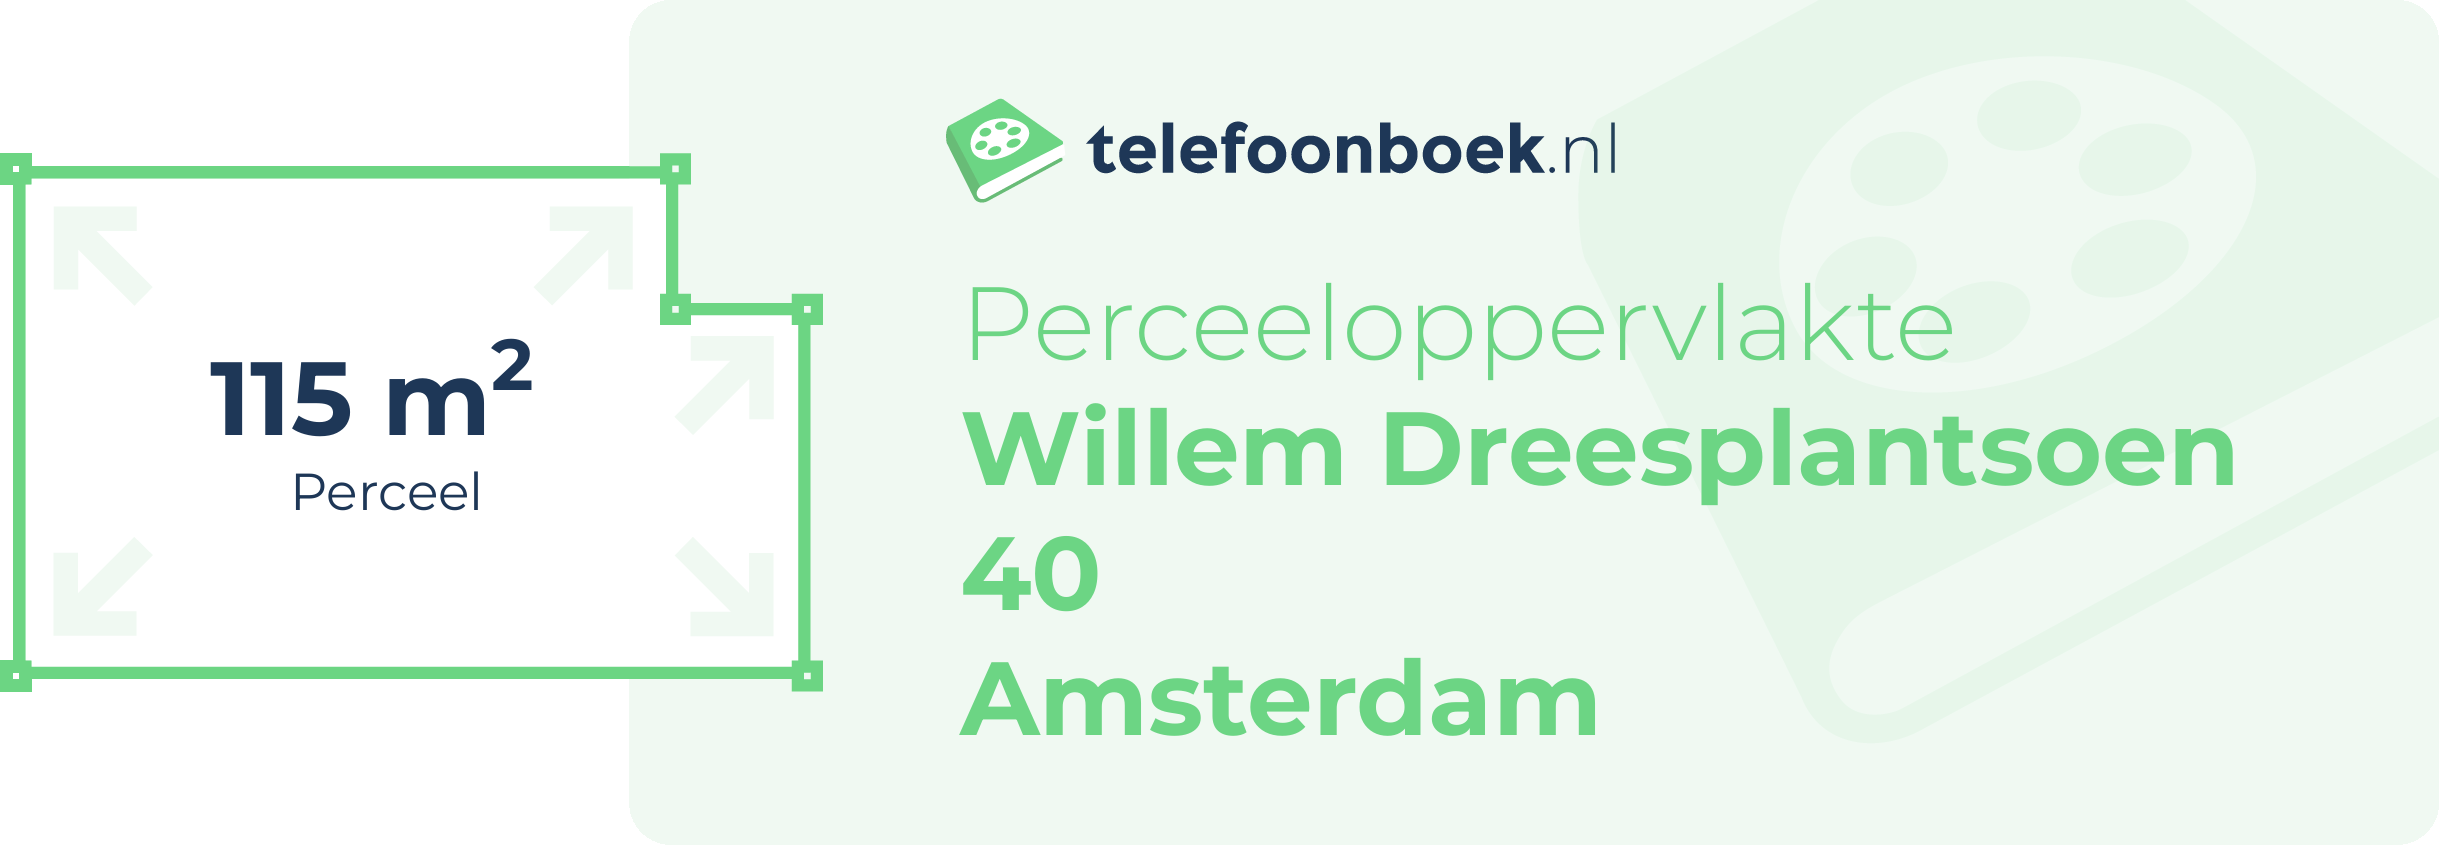 Perceeloppervlakte Willem Dreesplantsoen 40 Amsterdam